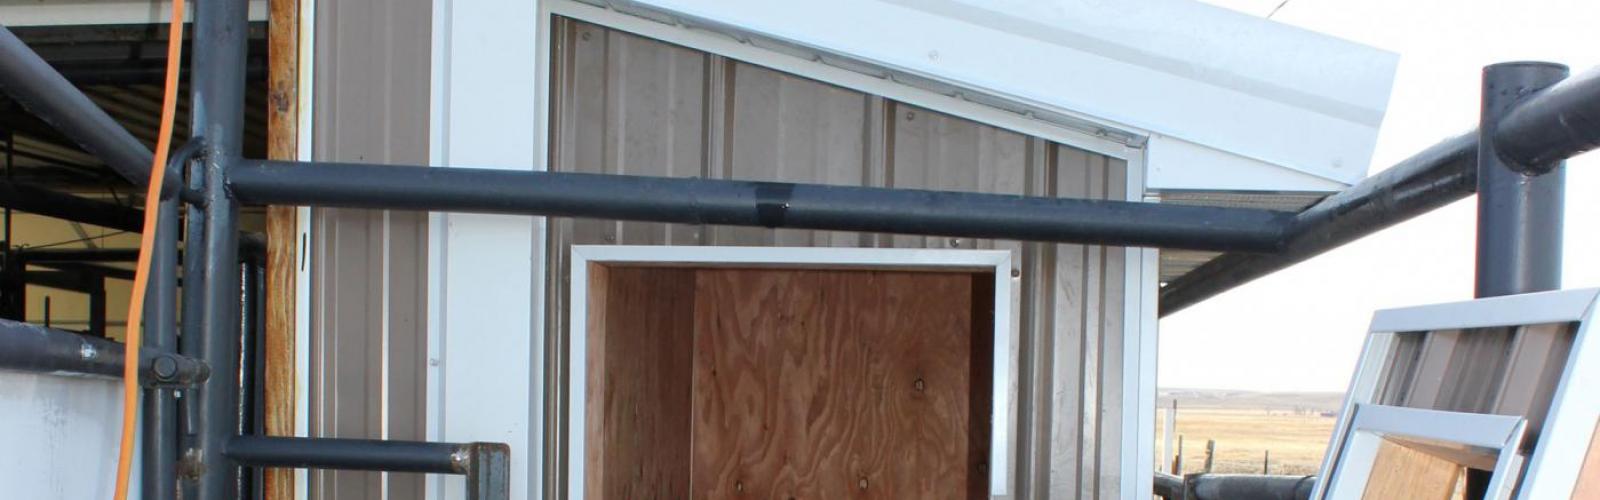 Pumphouse addition metal siding soffit fascia roofing Three Forks MT Harmon Enterprises Construction